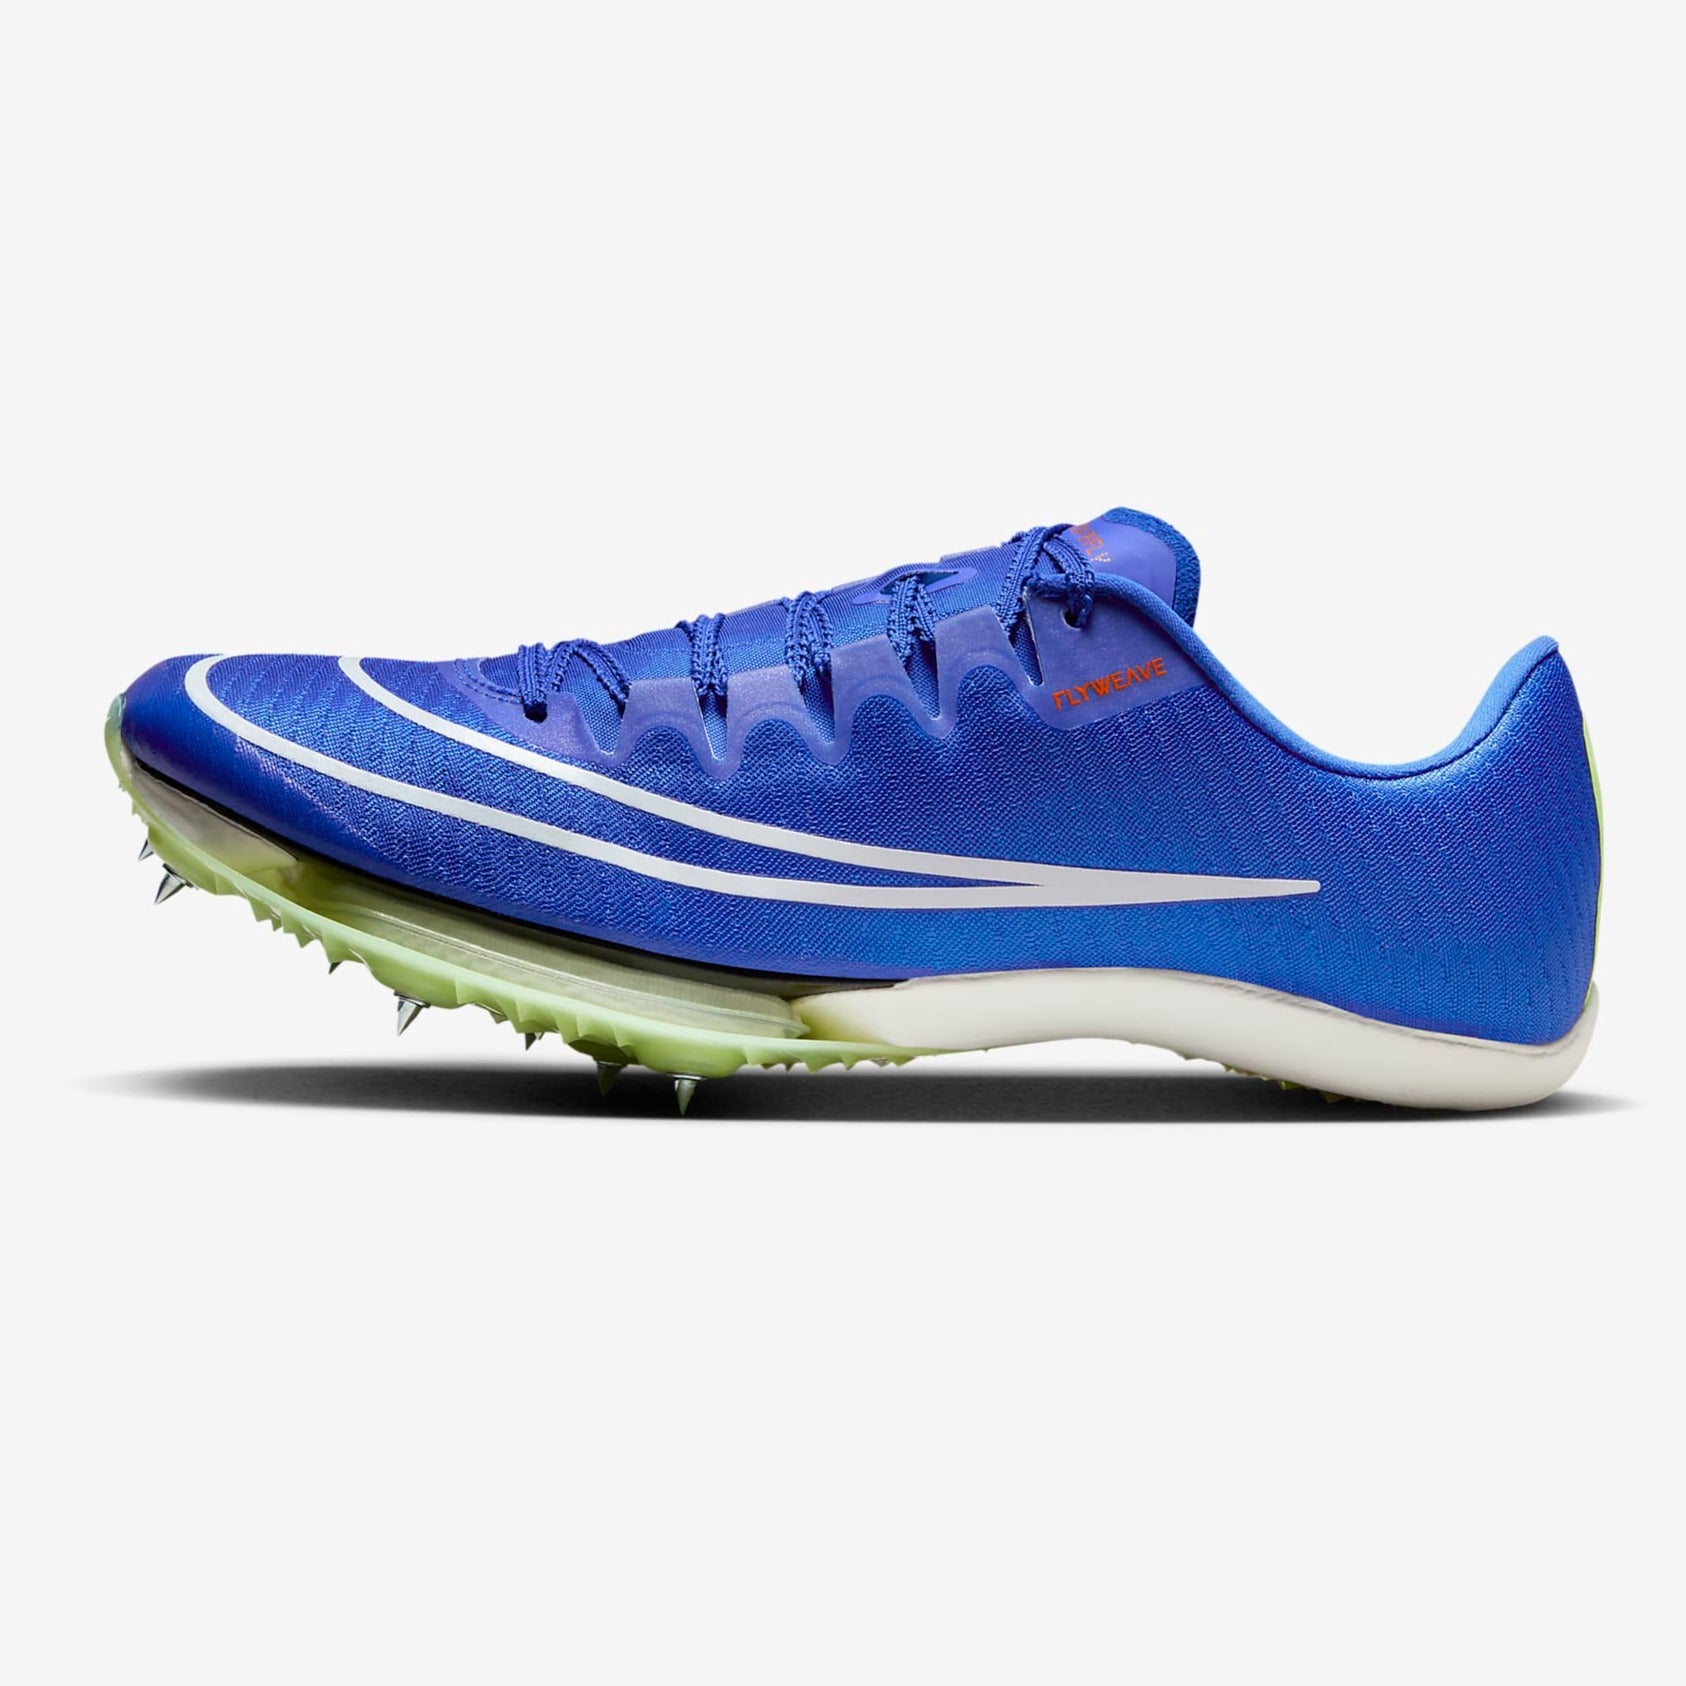 Nike Air Zoom Maxfly Sprint Spikes Blue